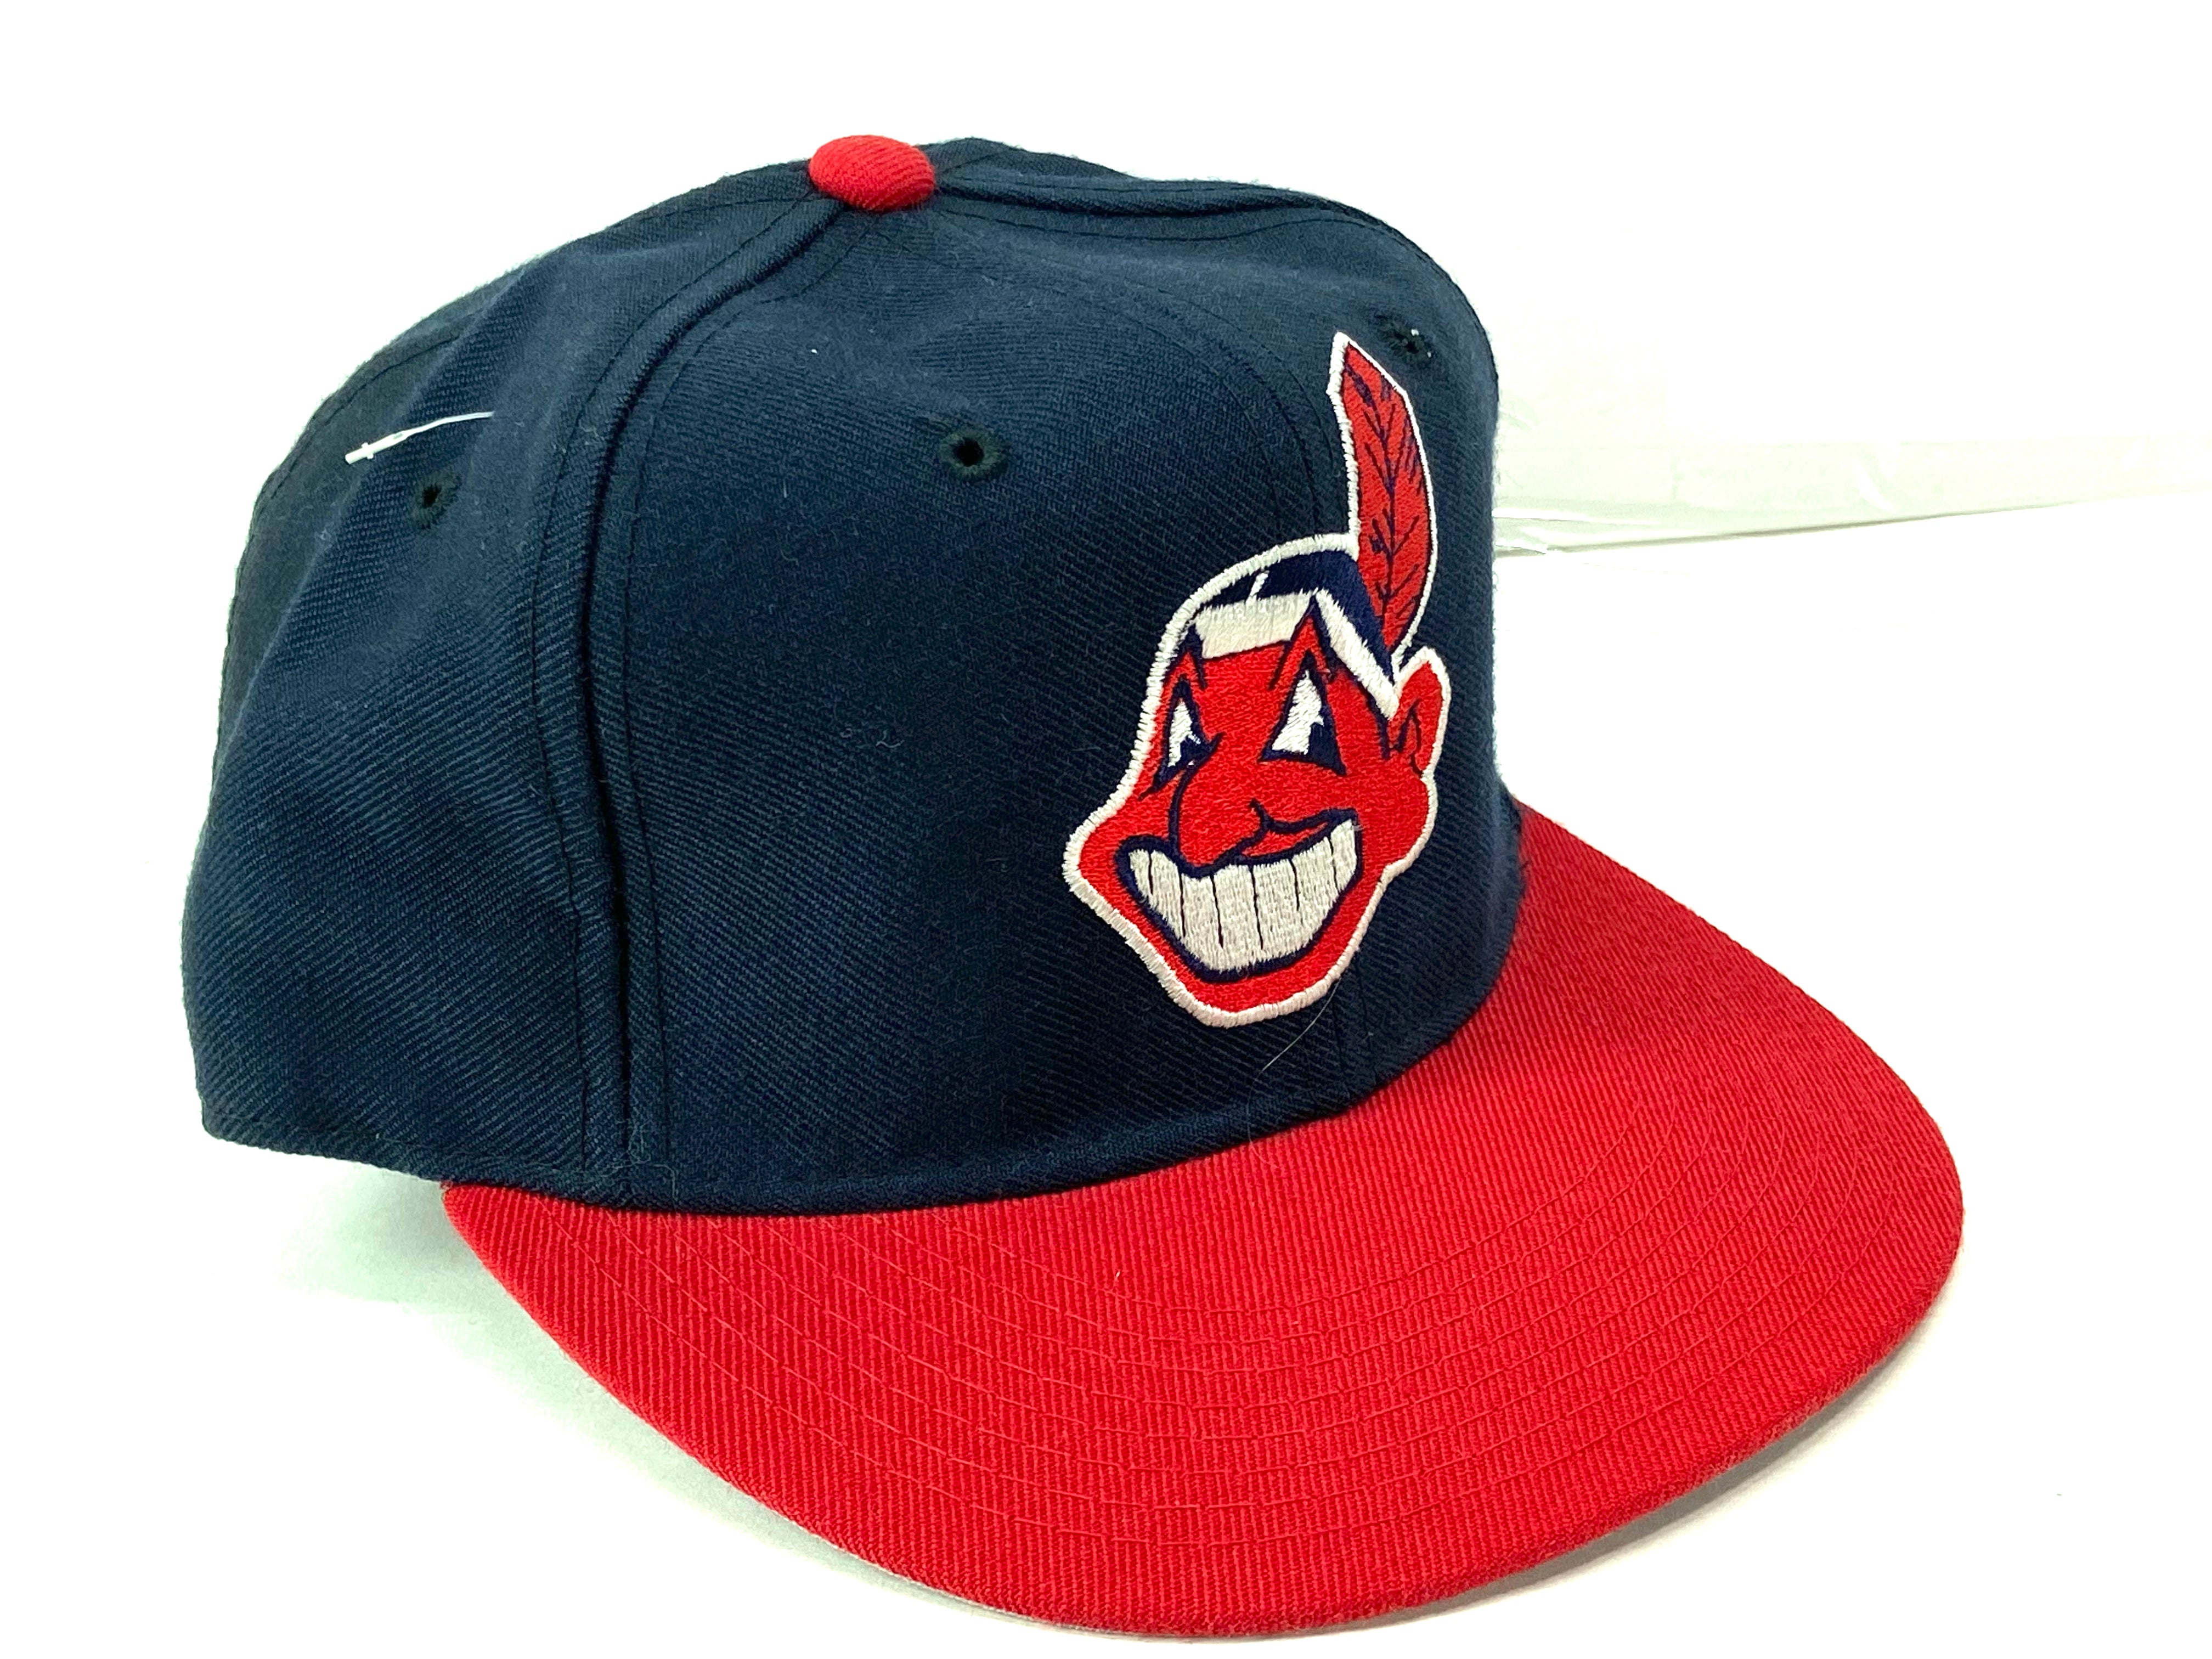 Vintage Minor League Baseball Snapback Hat New Era Made USA  Etsy